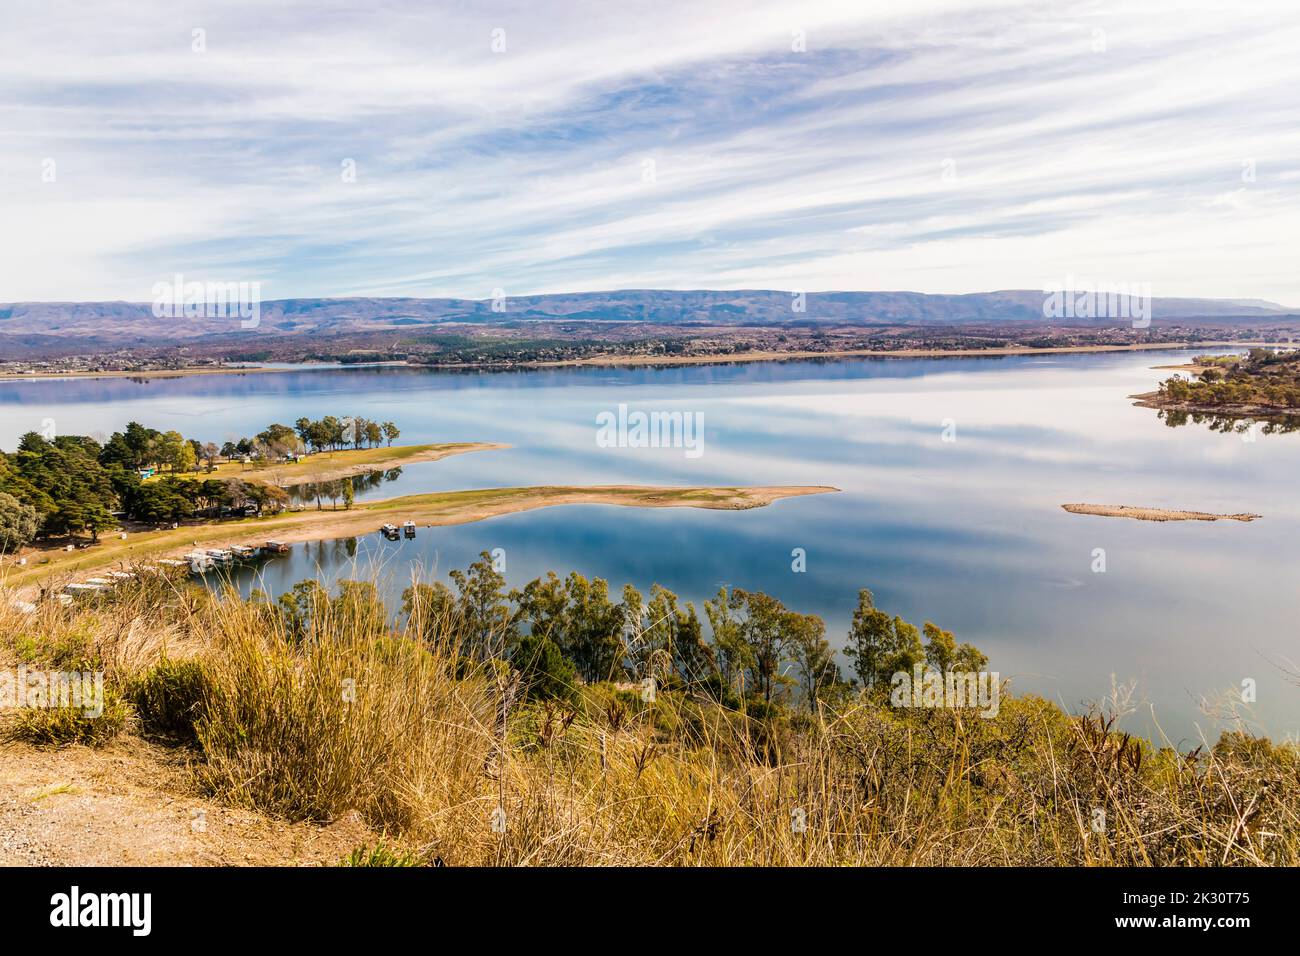 Argentina, Cordoba Province, La Estancia, Shore of Los Molinos Lake with hills in background Stock Photo